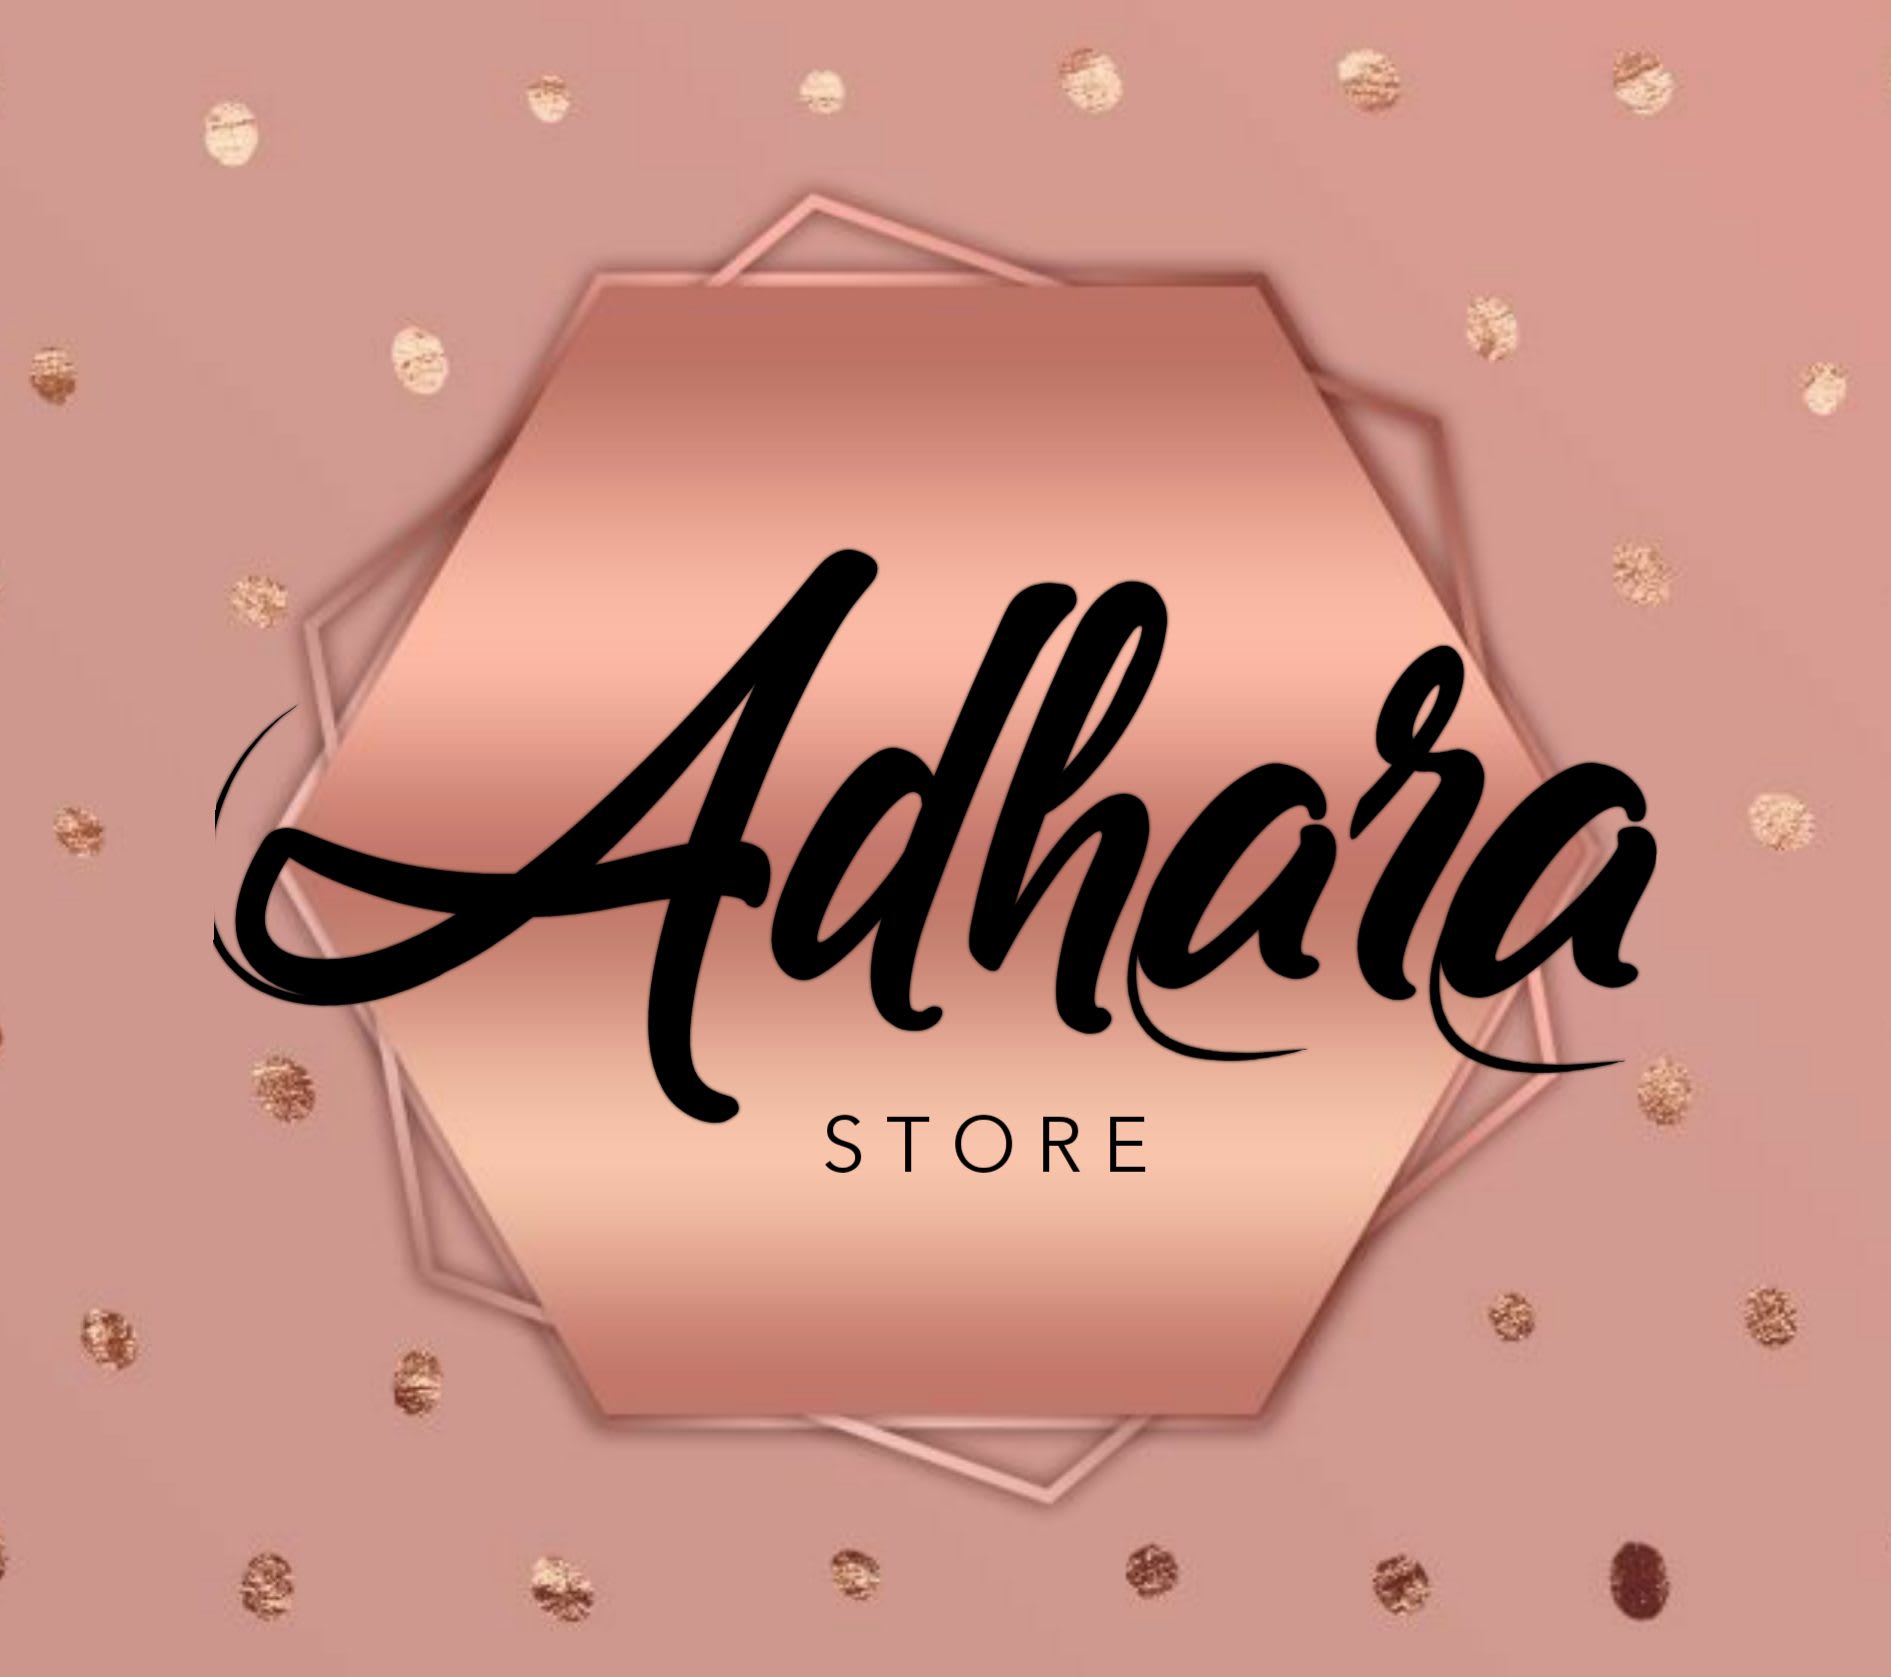 Adhara Store